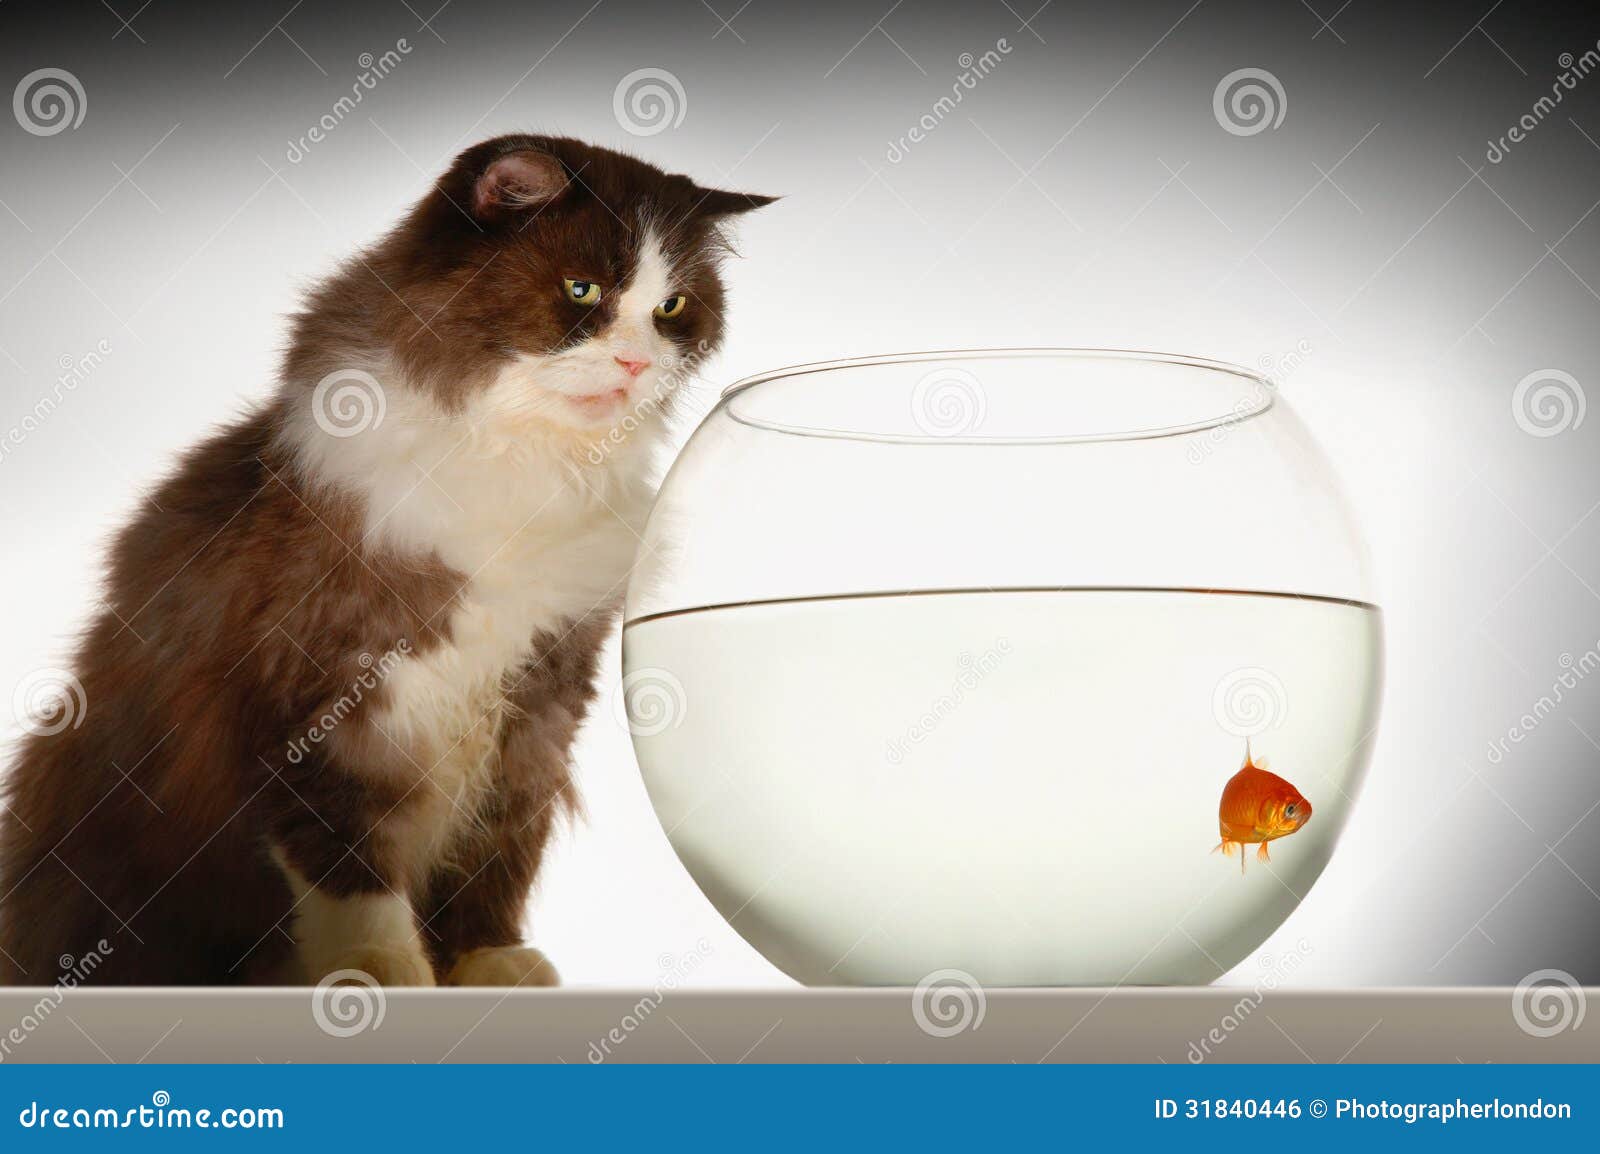 cat looking at goldfish in fishbowl